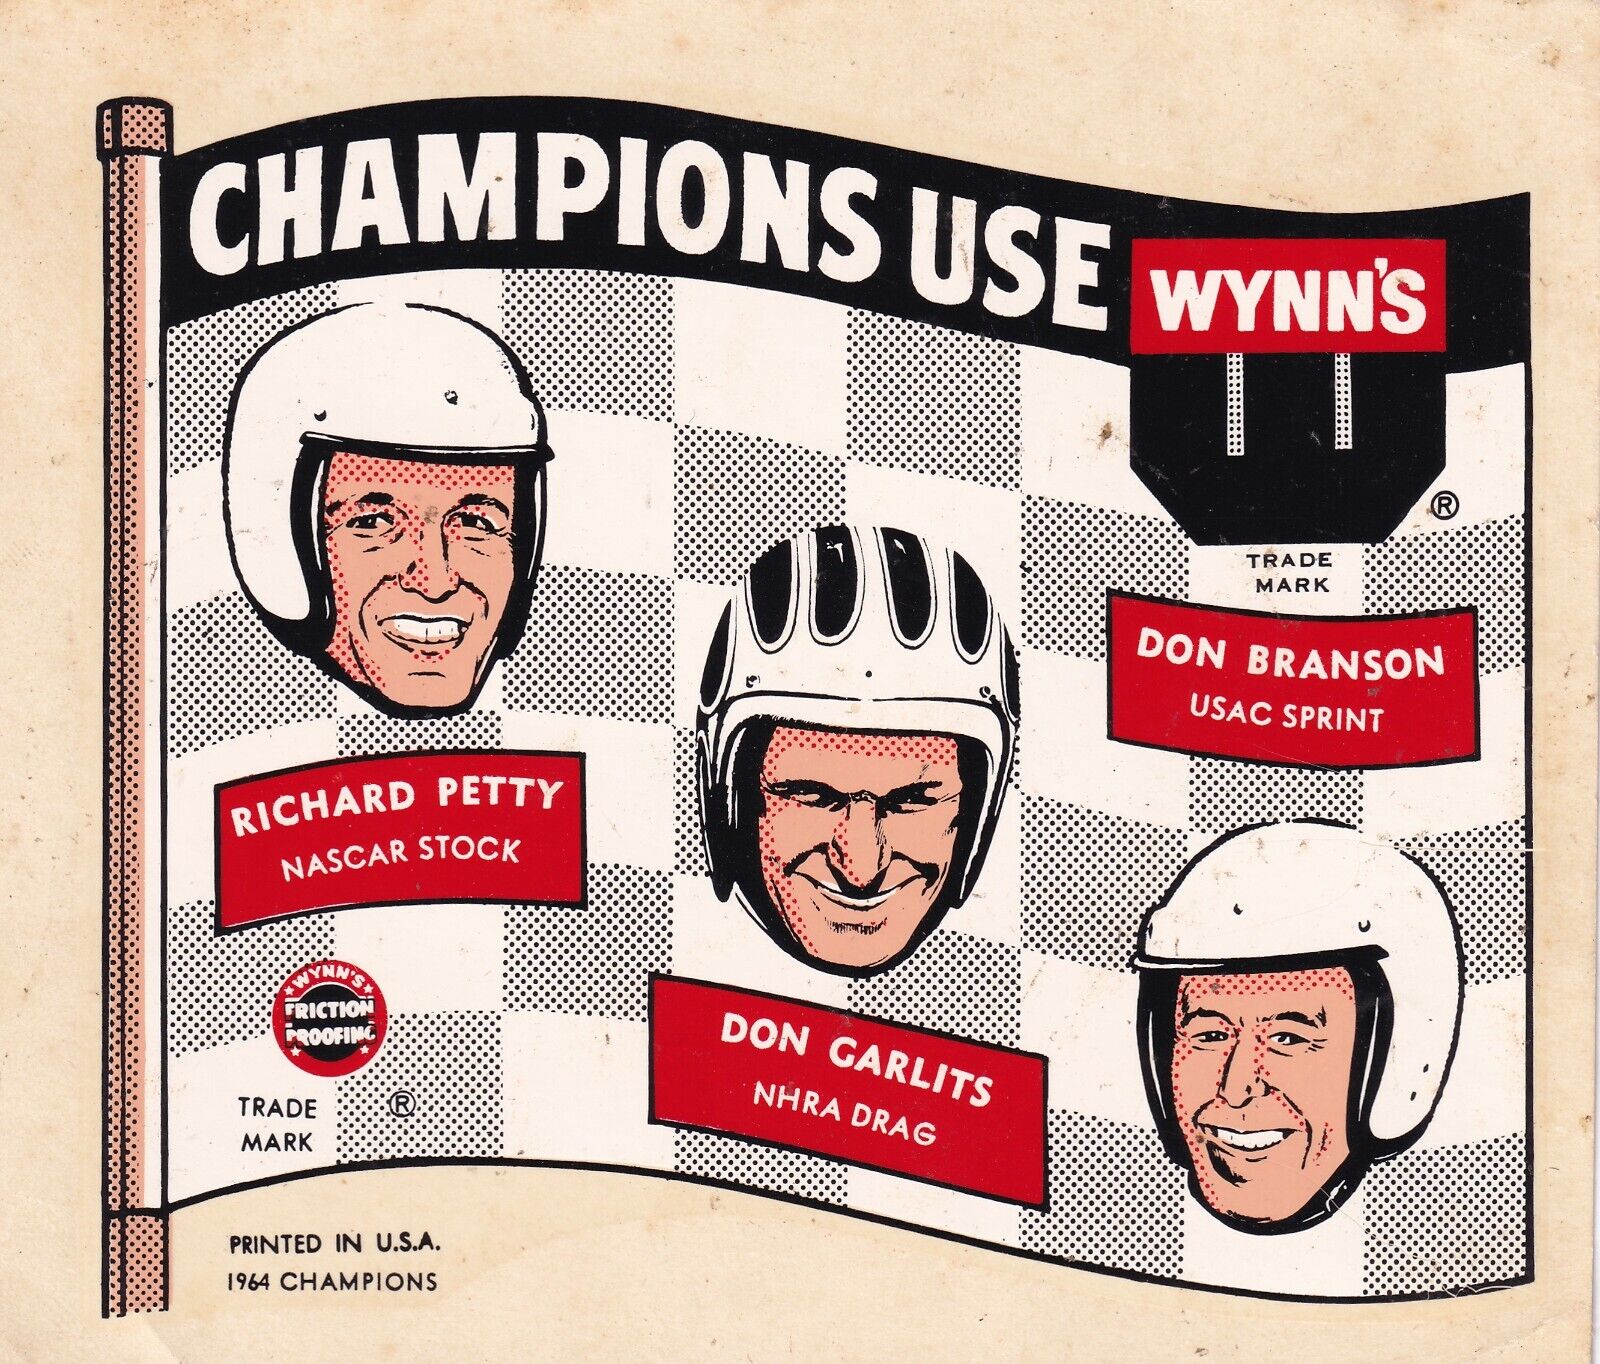 Richard Petty Original Vintage Car Decal: CHAMPIONS USE WYNN'S Garlits, Branson